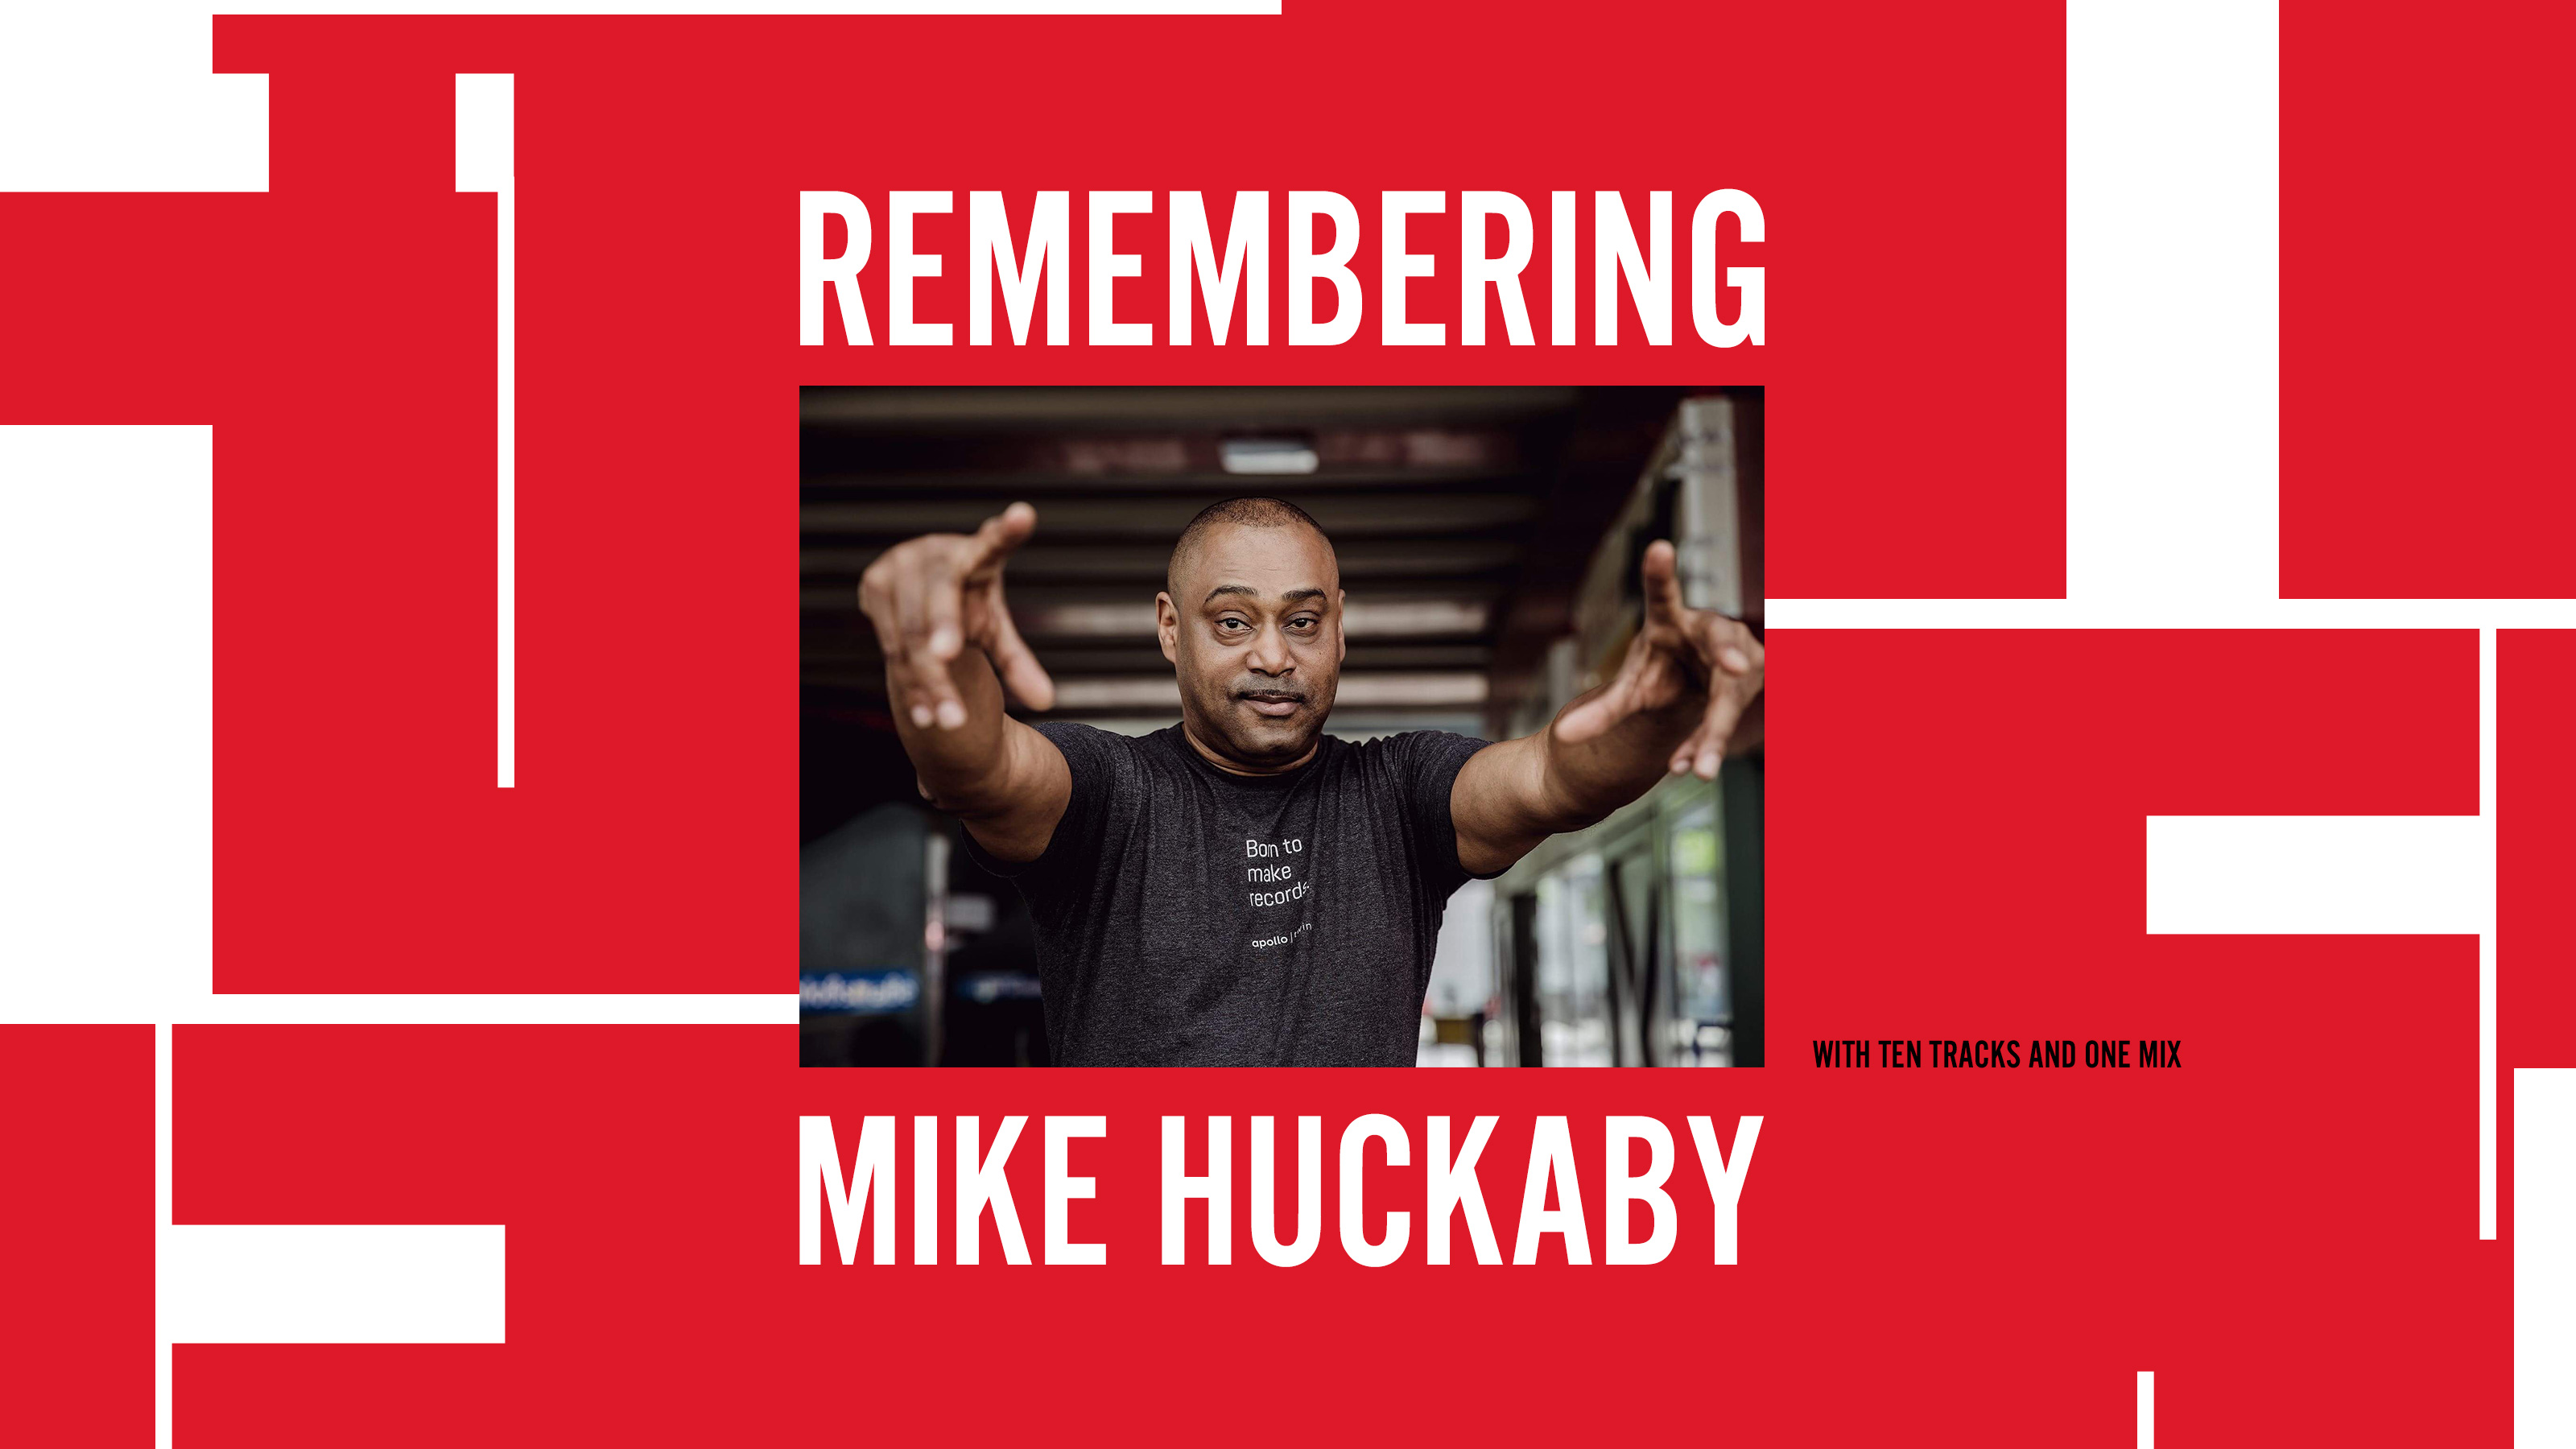 Mike Huckabyを偲んで: 10曲と1本のミックス